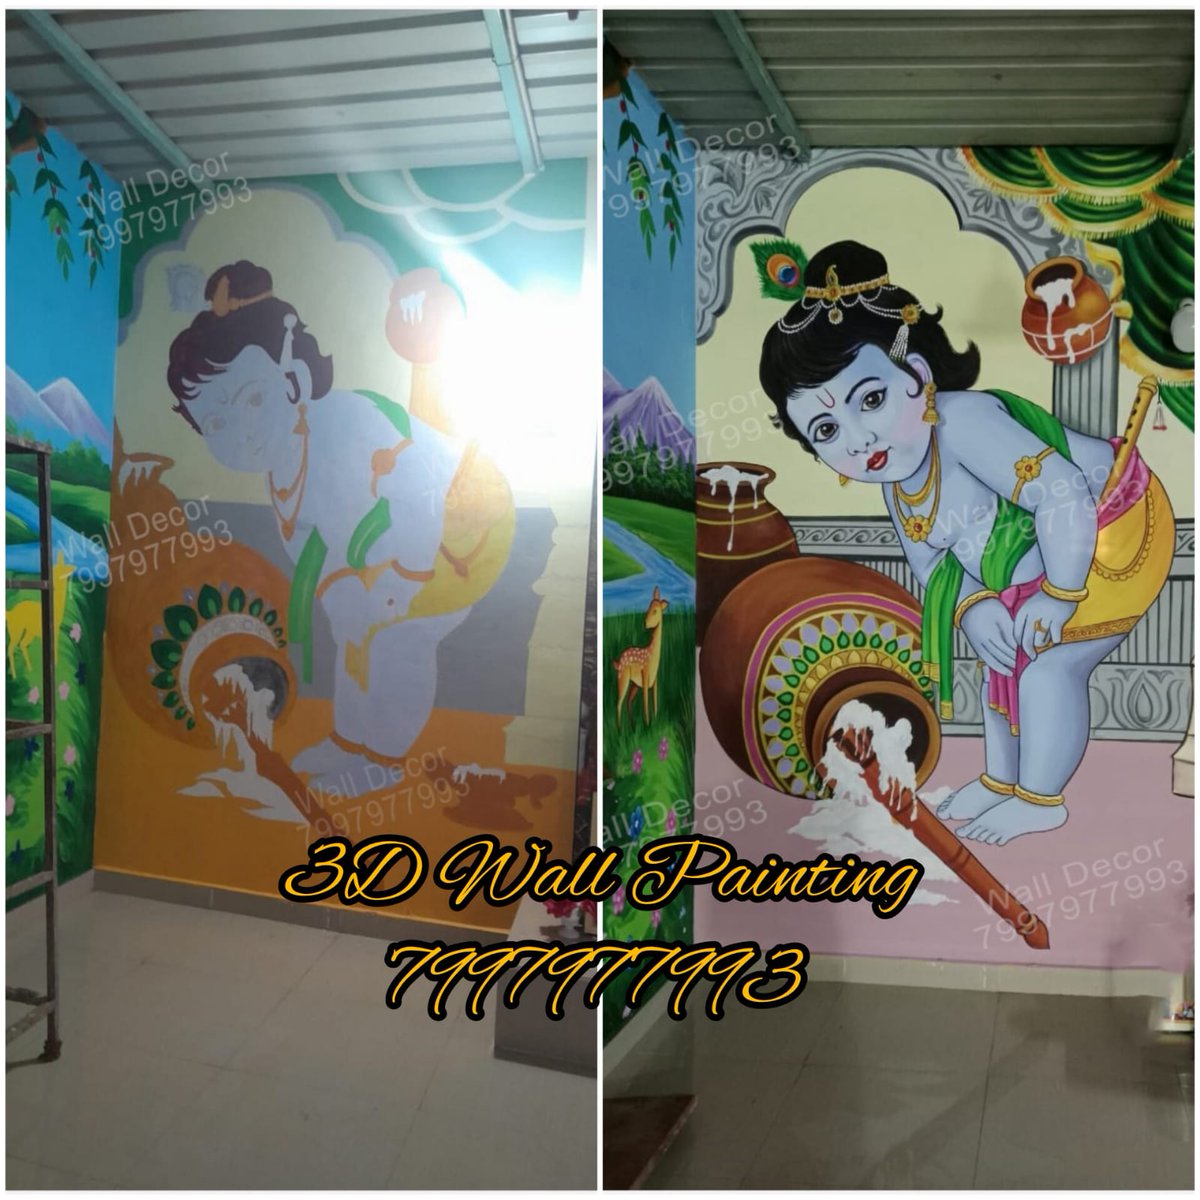 Lord Bala Krishna Wall Painting in SRI SAI DEEPTHI HIGH SCHOOL at Puttaparthi
#Lordkrishnapainting
#balakrishna
#wallpainting
#3DWallpainting
#balgopal
#wallartpainting
#balapainting
#krishnamural
#3dwallpaintinginschool
#srisaideepthi
#HighSchool
#puttaparthi